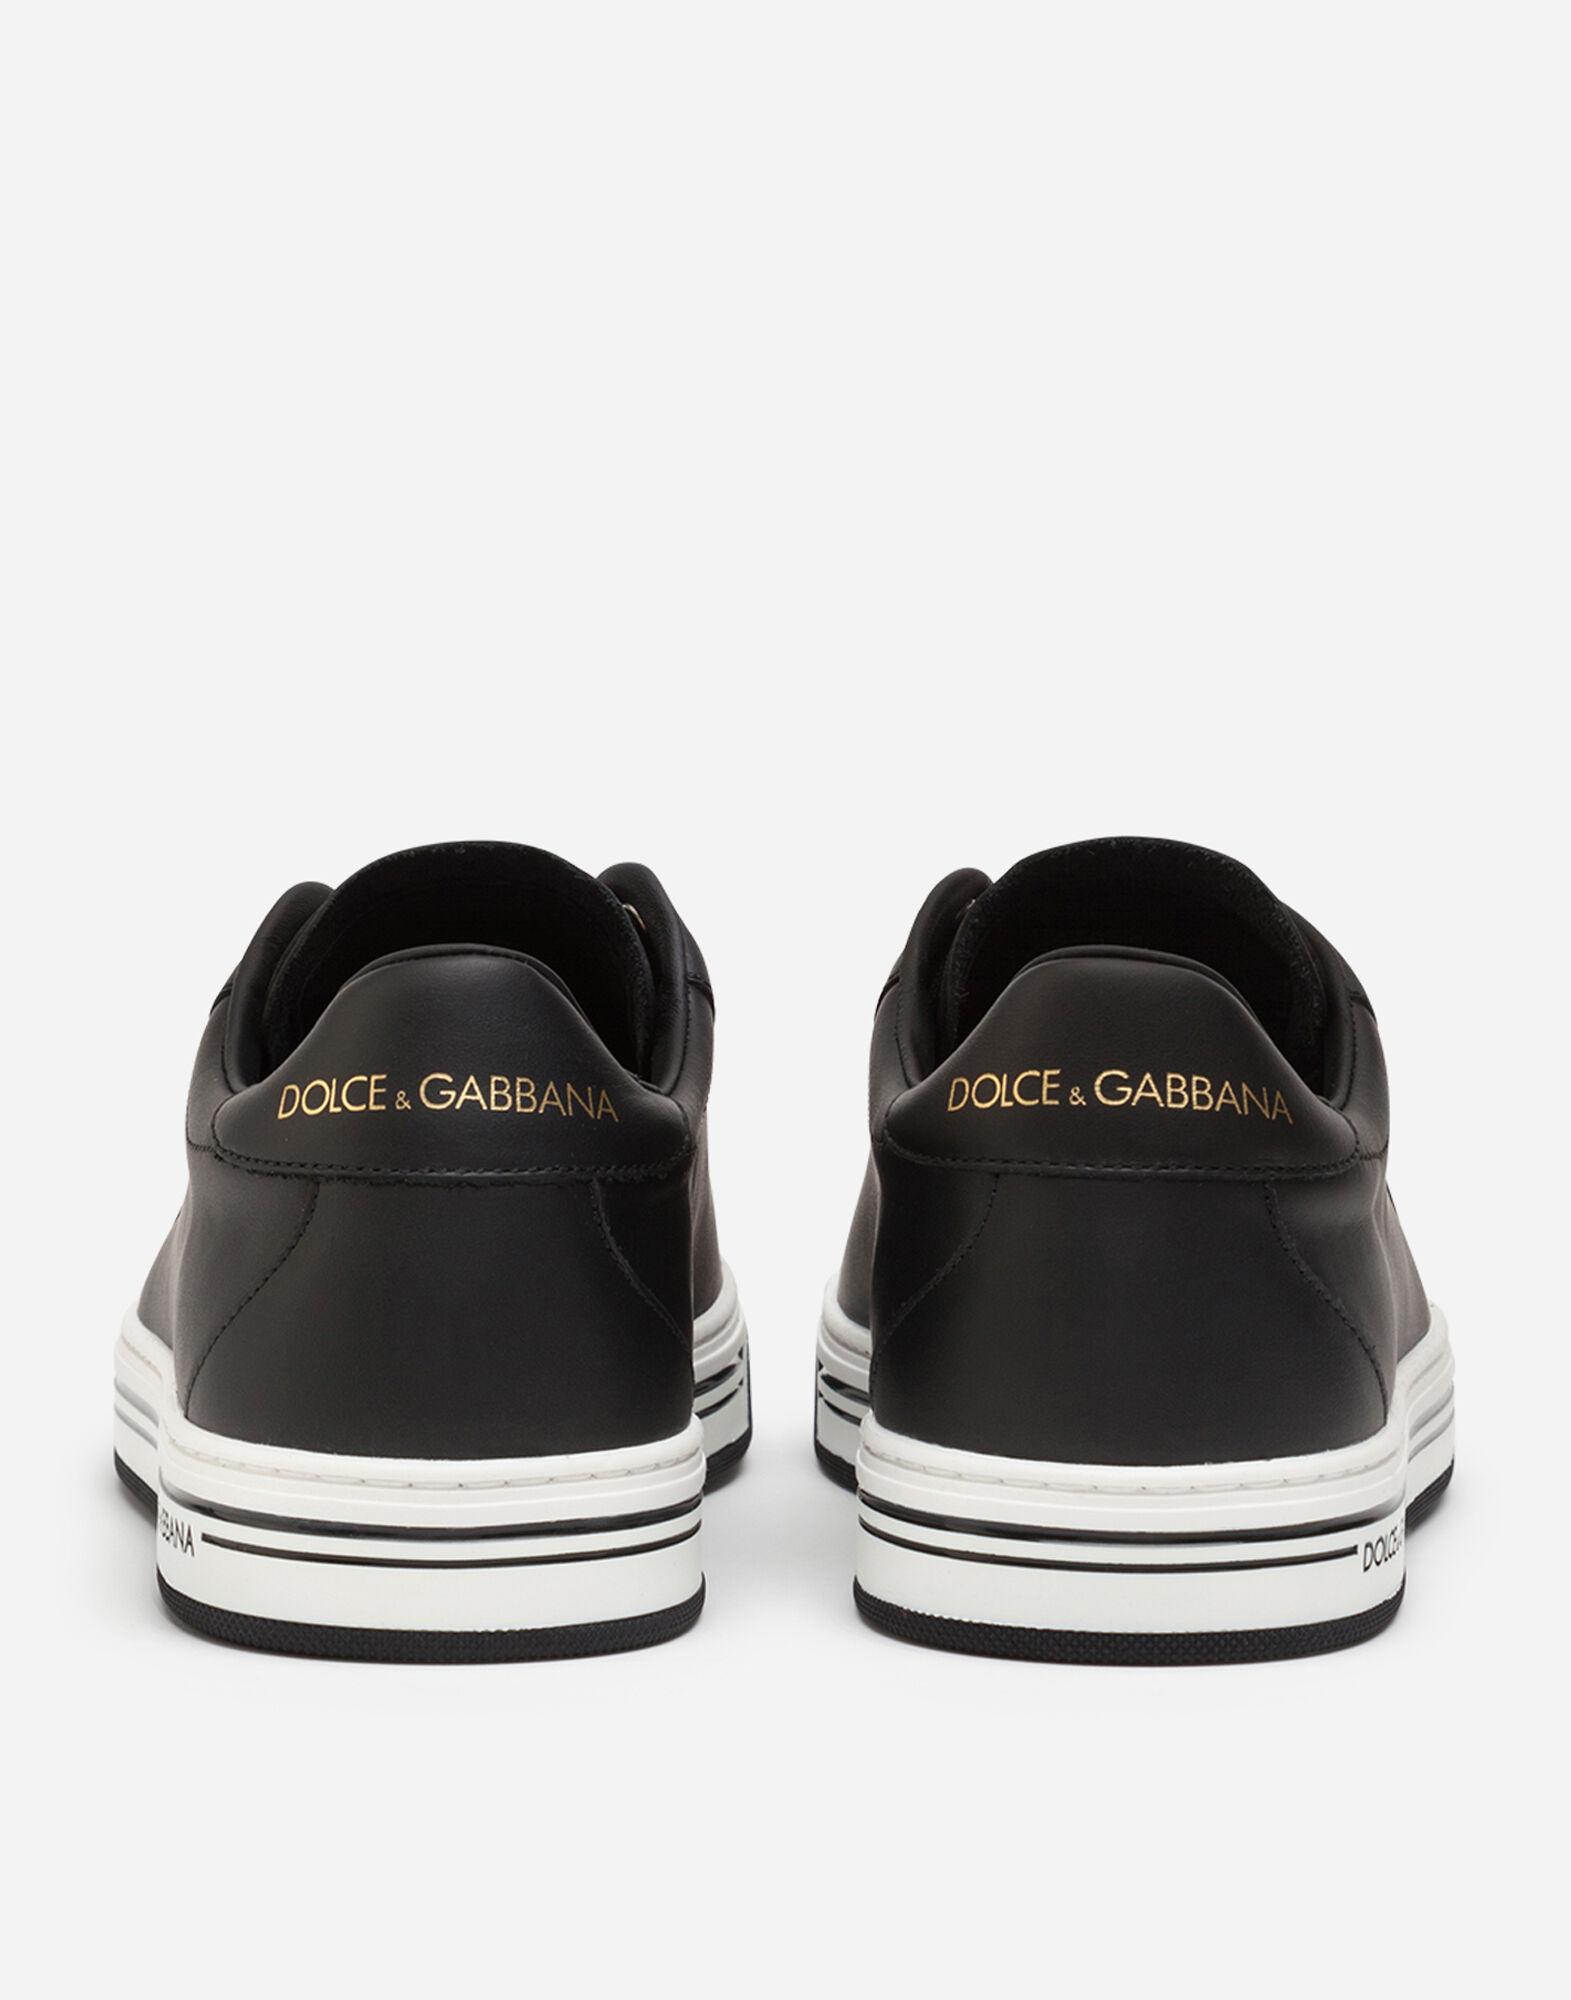 Dolce & Gabbana Leather Roma Sneakers In Printed Nappa Calfskin in